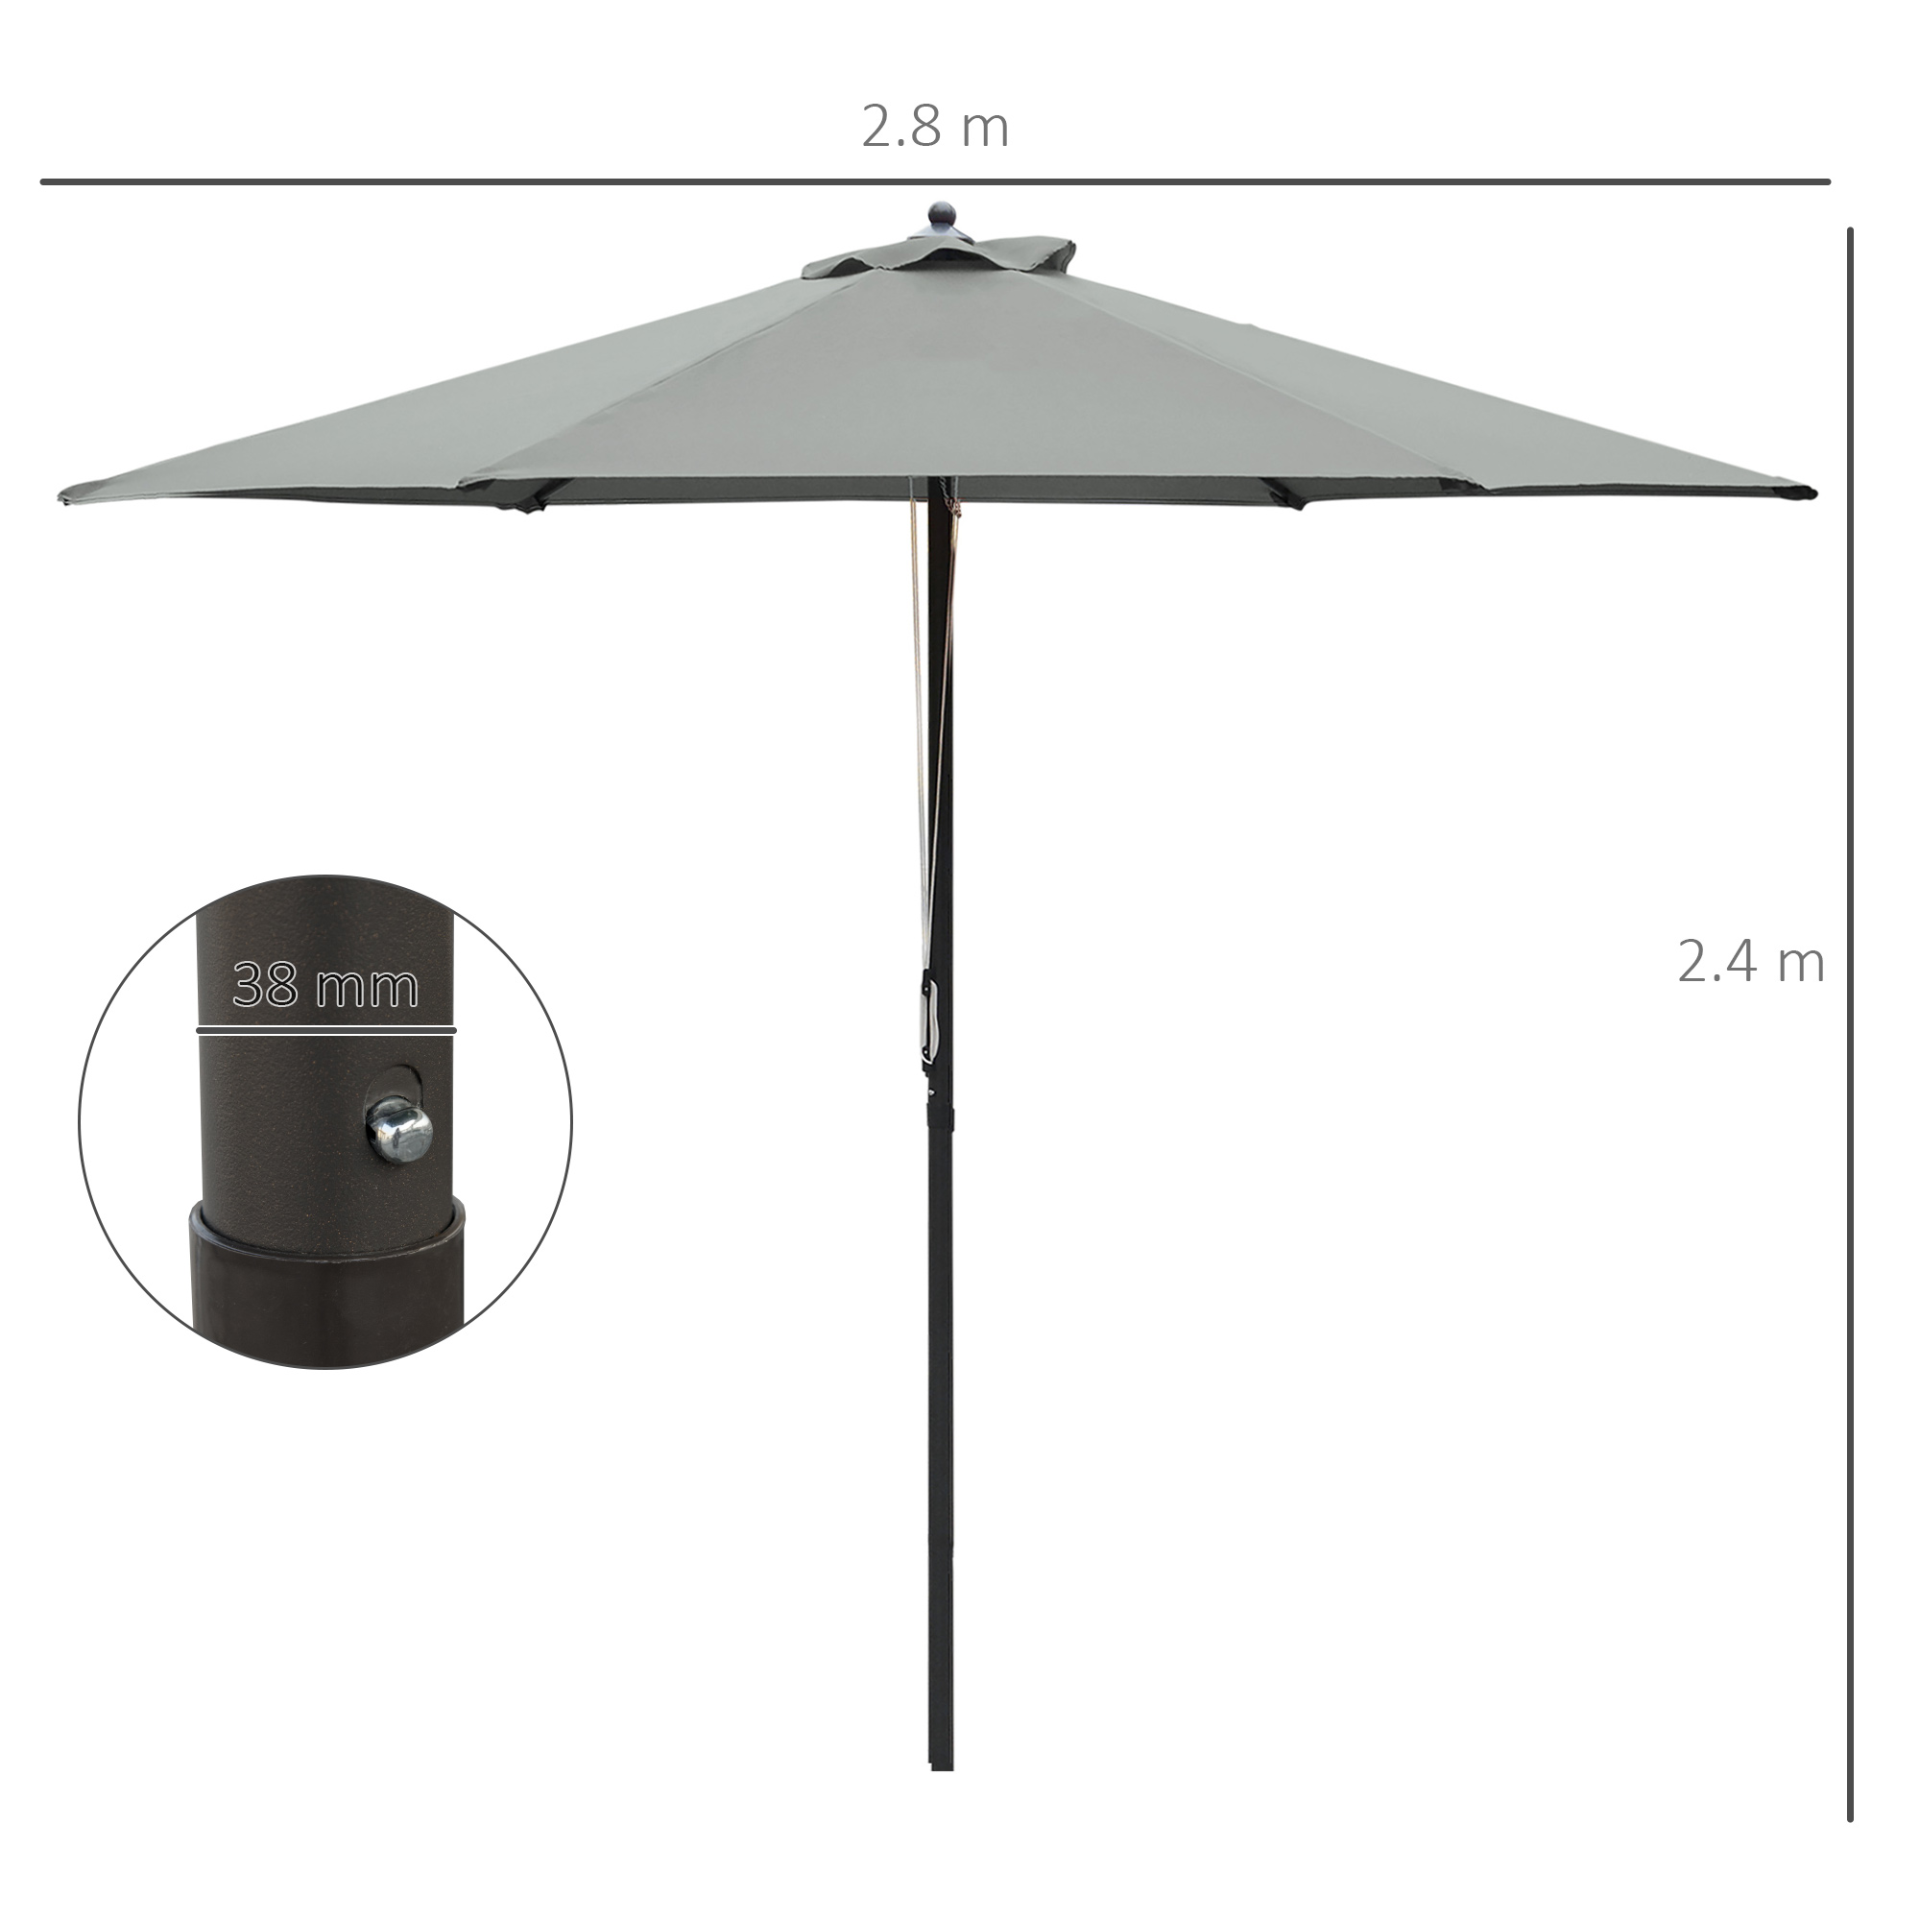 Outsunny 2.8m Patio Parasols Umbrellas Outdoor 6 Ribs Sunshade Canopy Manual Push Garden Backyard Furniture, Dark Grey